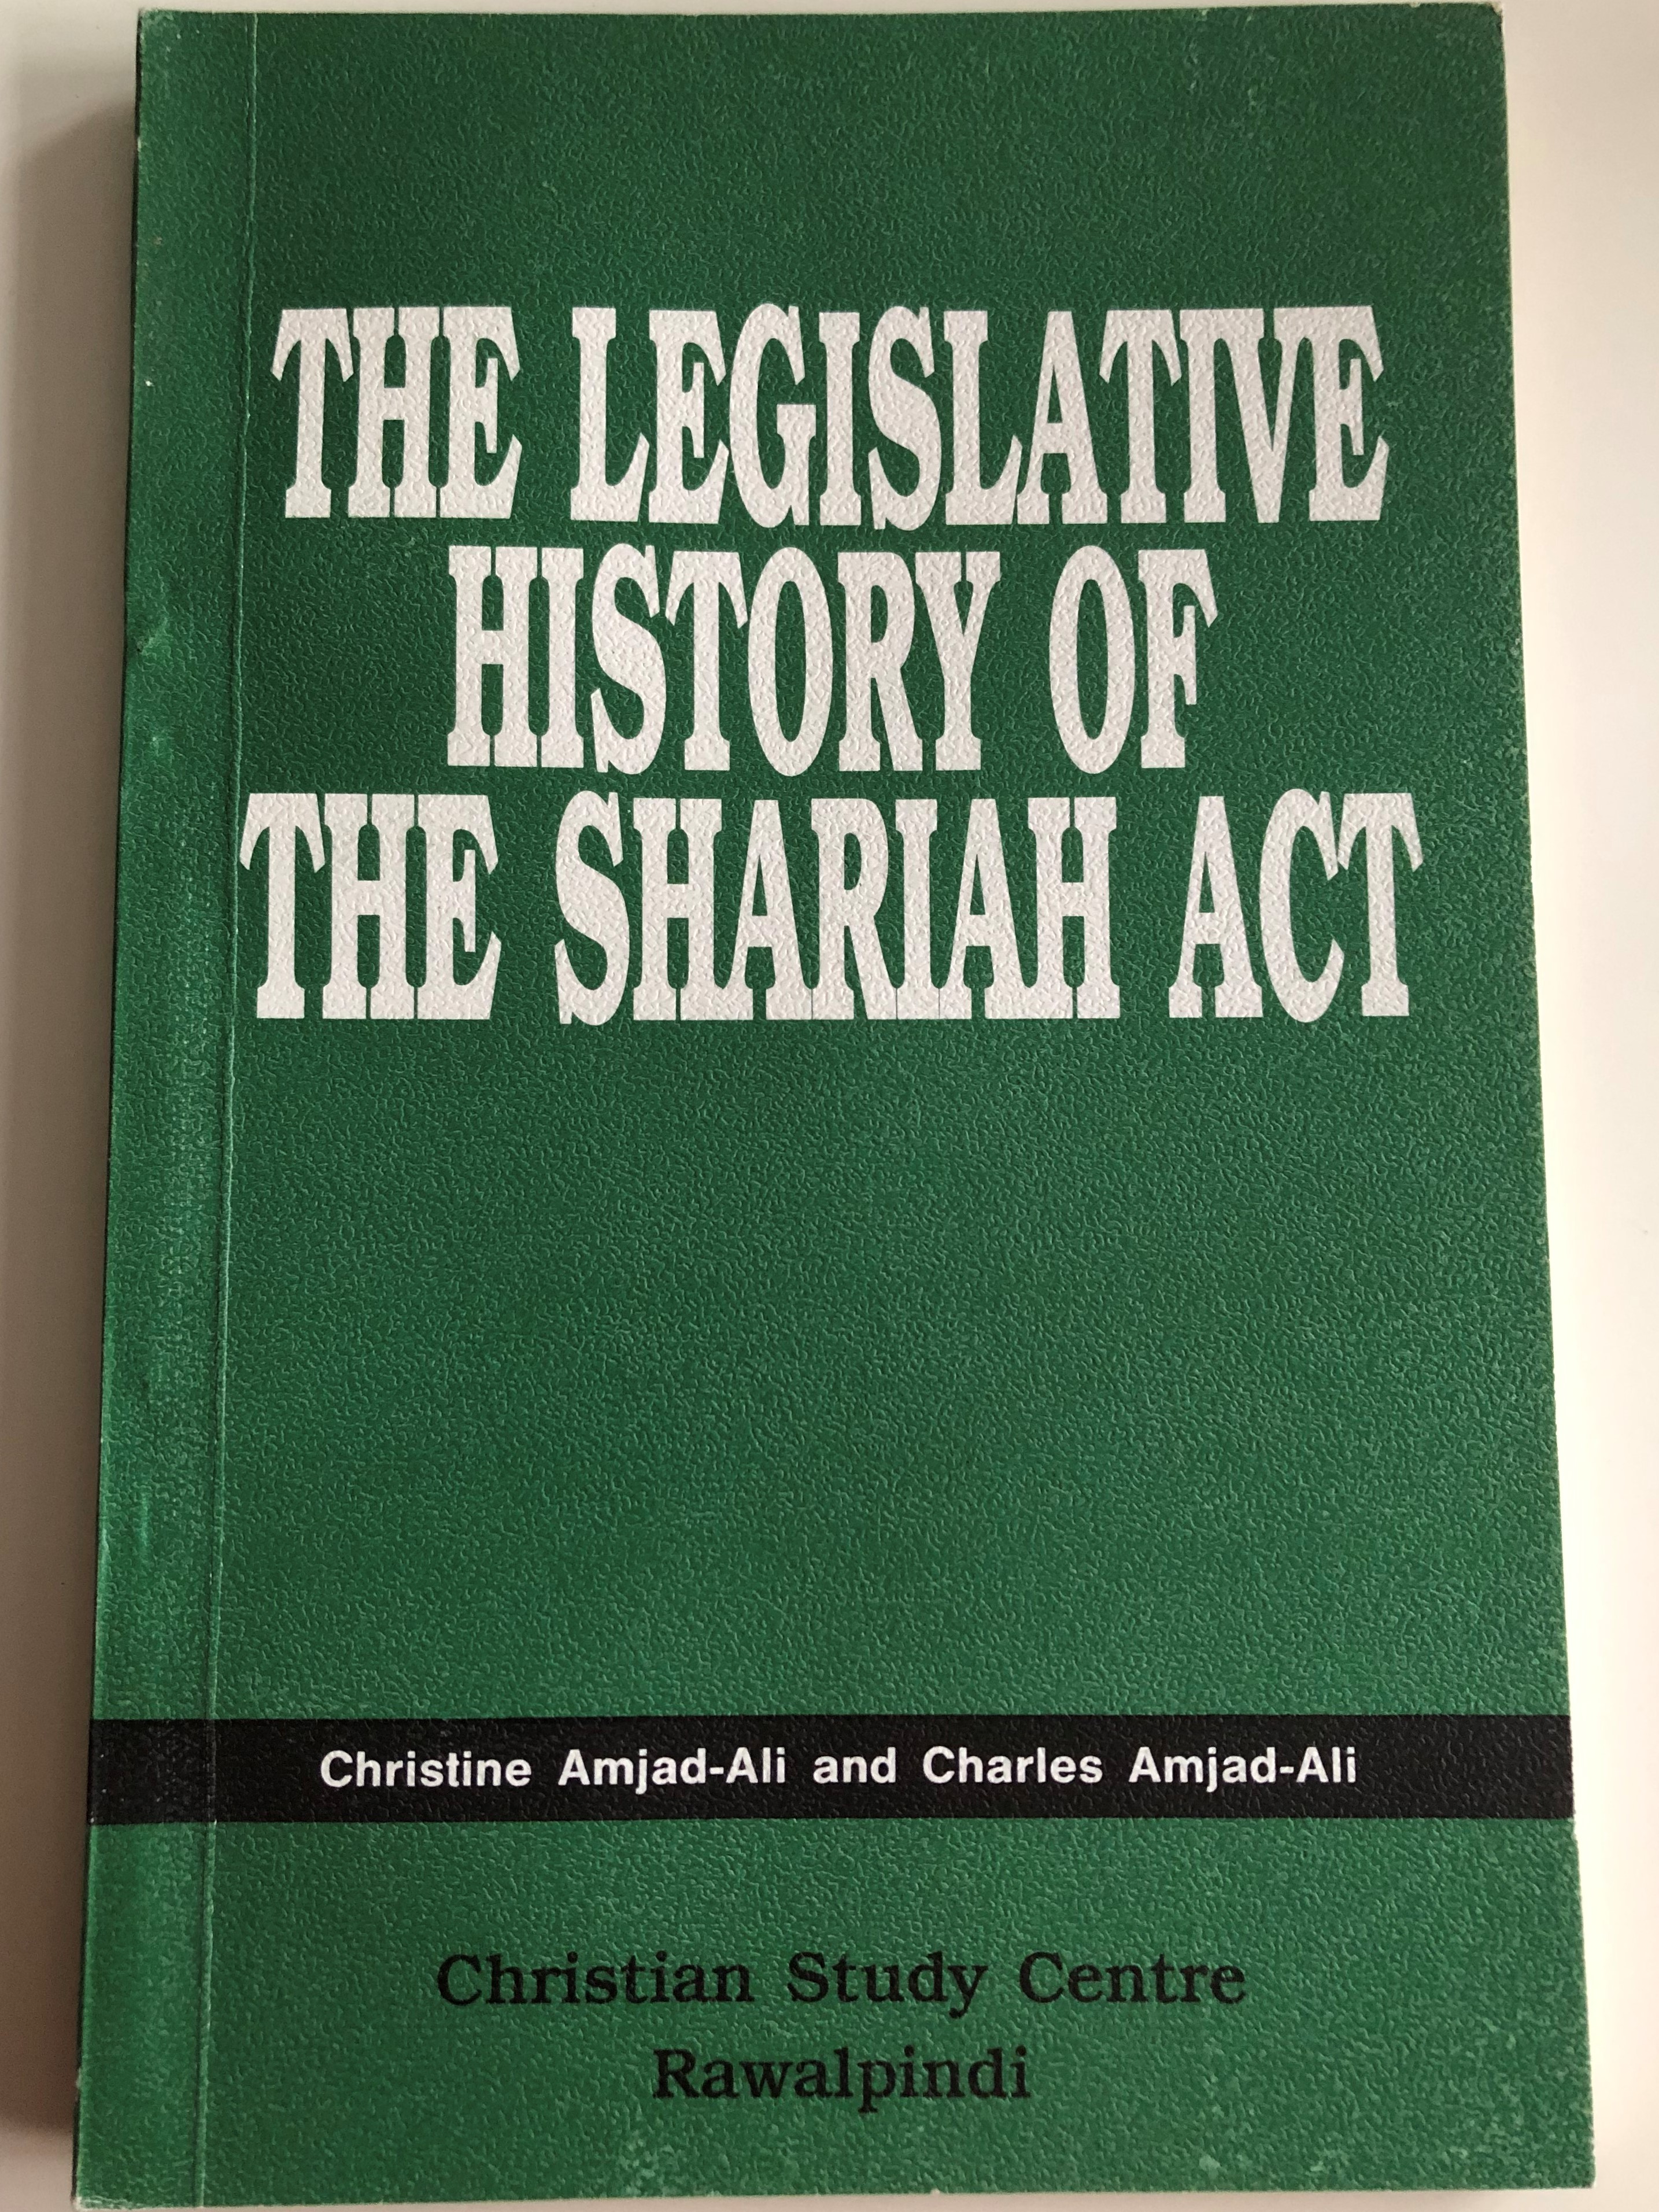 the-legislative-history-of-the-shariah-act-by-christine-amjad-ali-and-charles-amjad-ali-1-.jpg